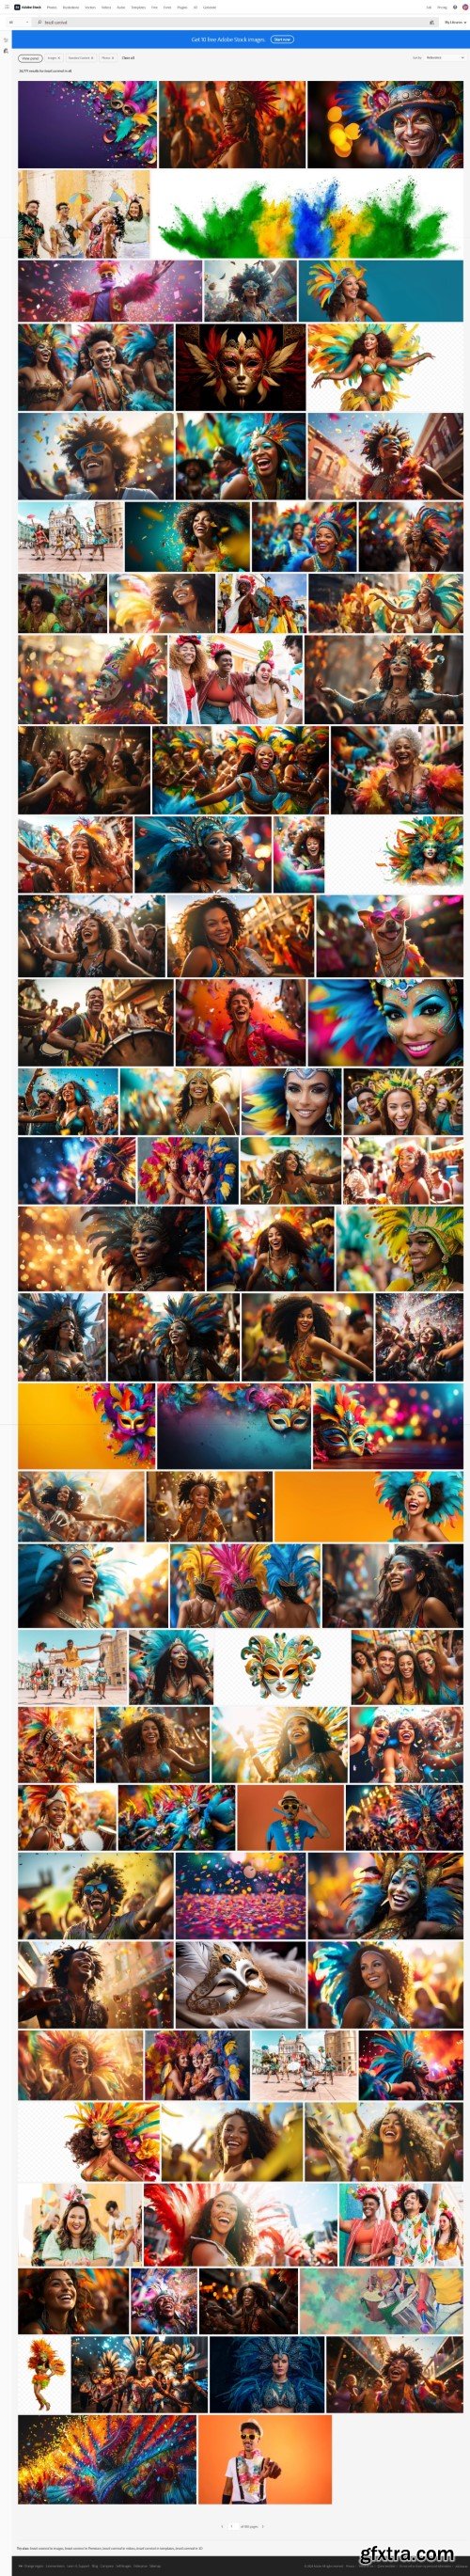 Brazil Carnival Stock Photos 100xJPEG